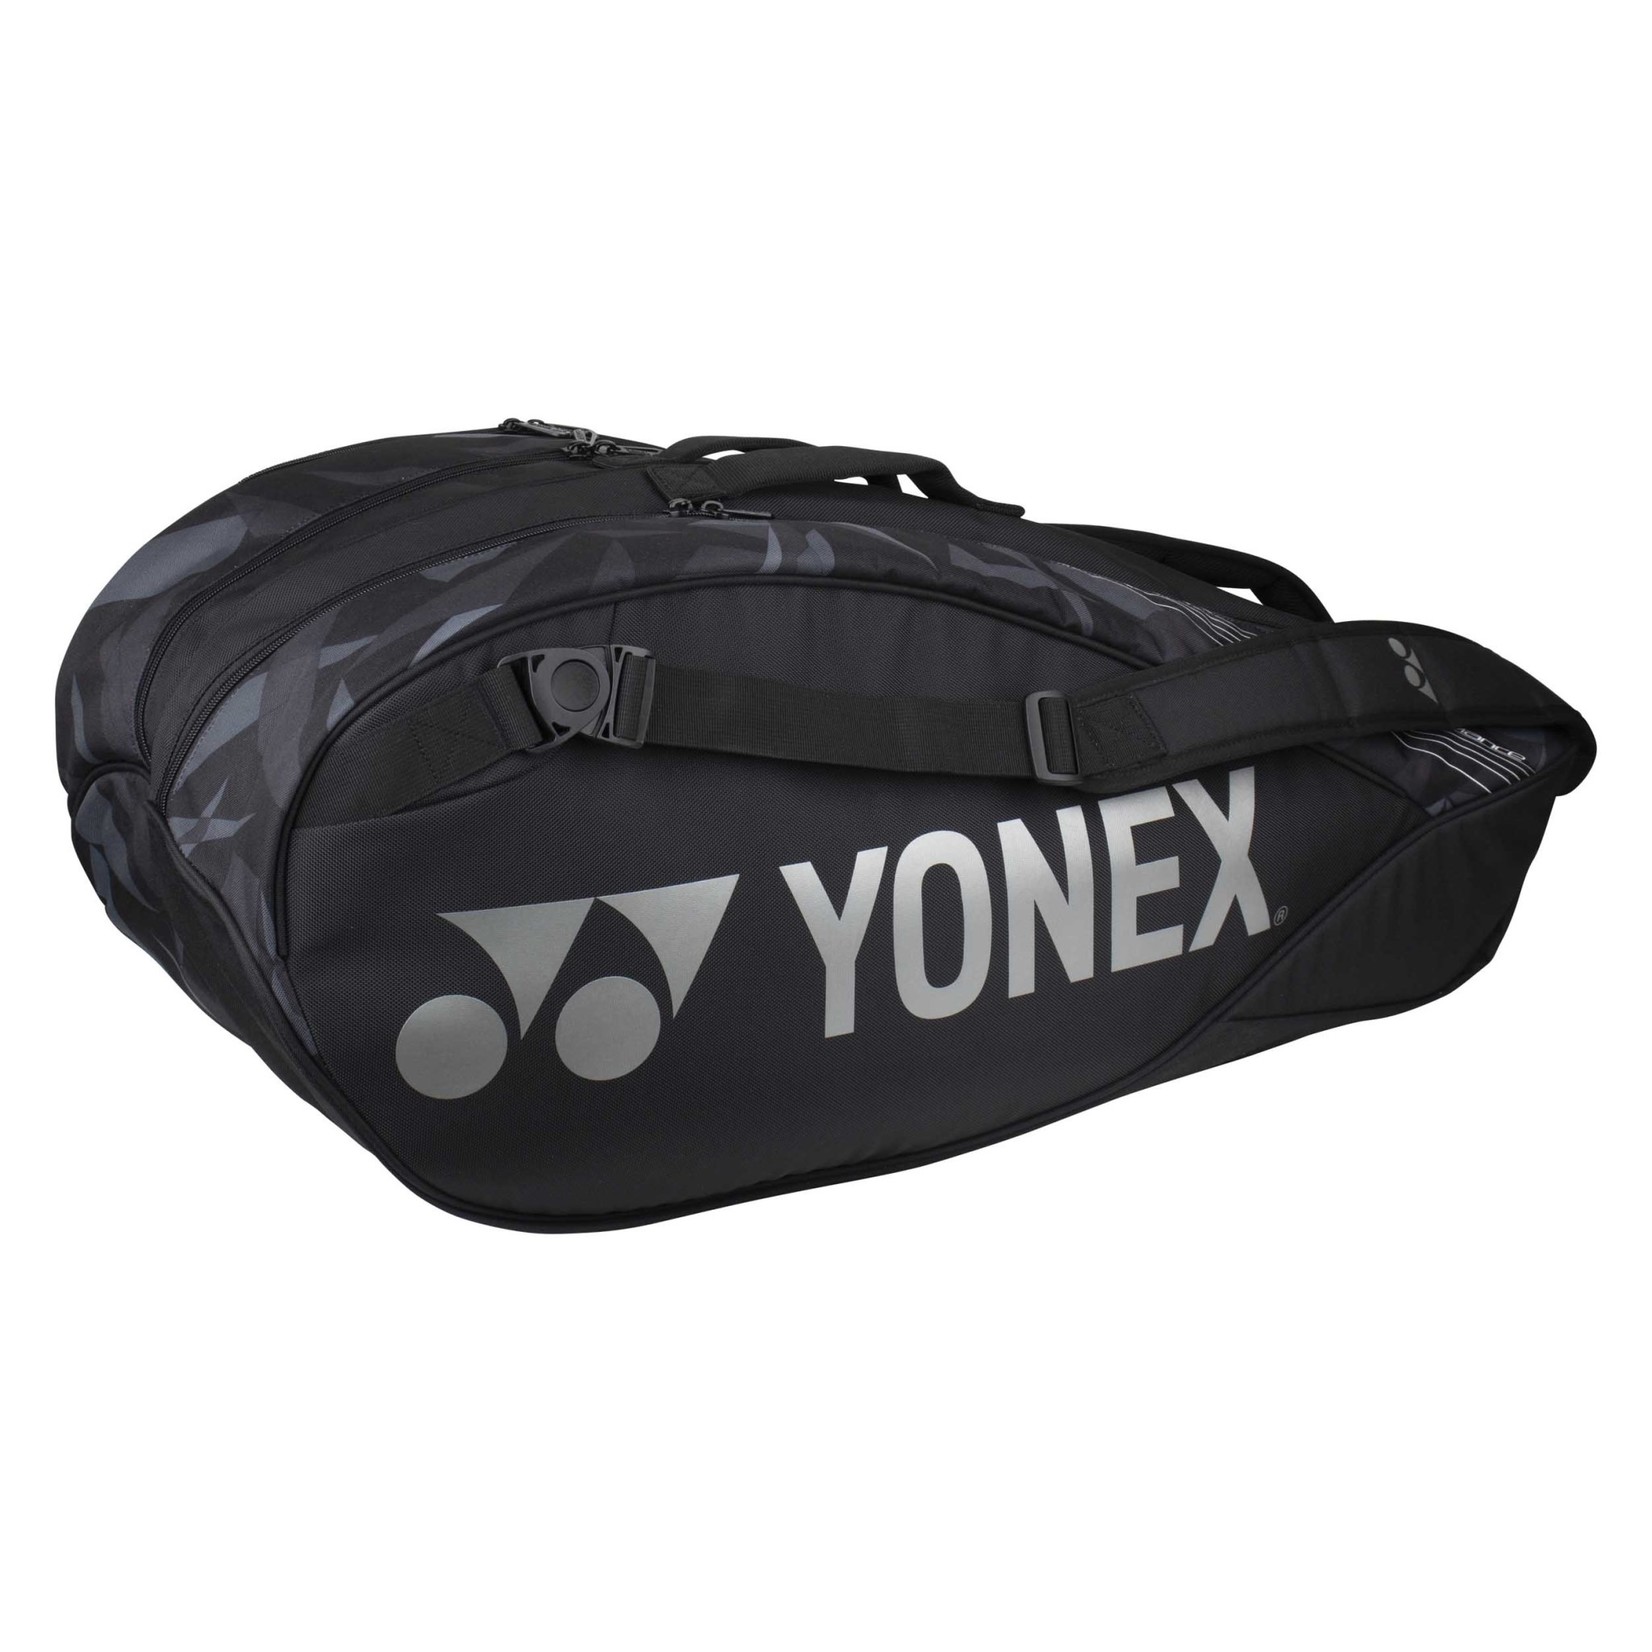 Yonex Pro Racket Bag 6